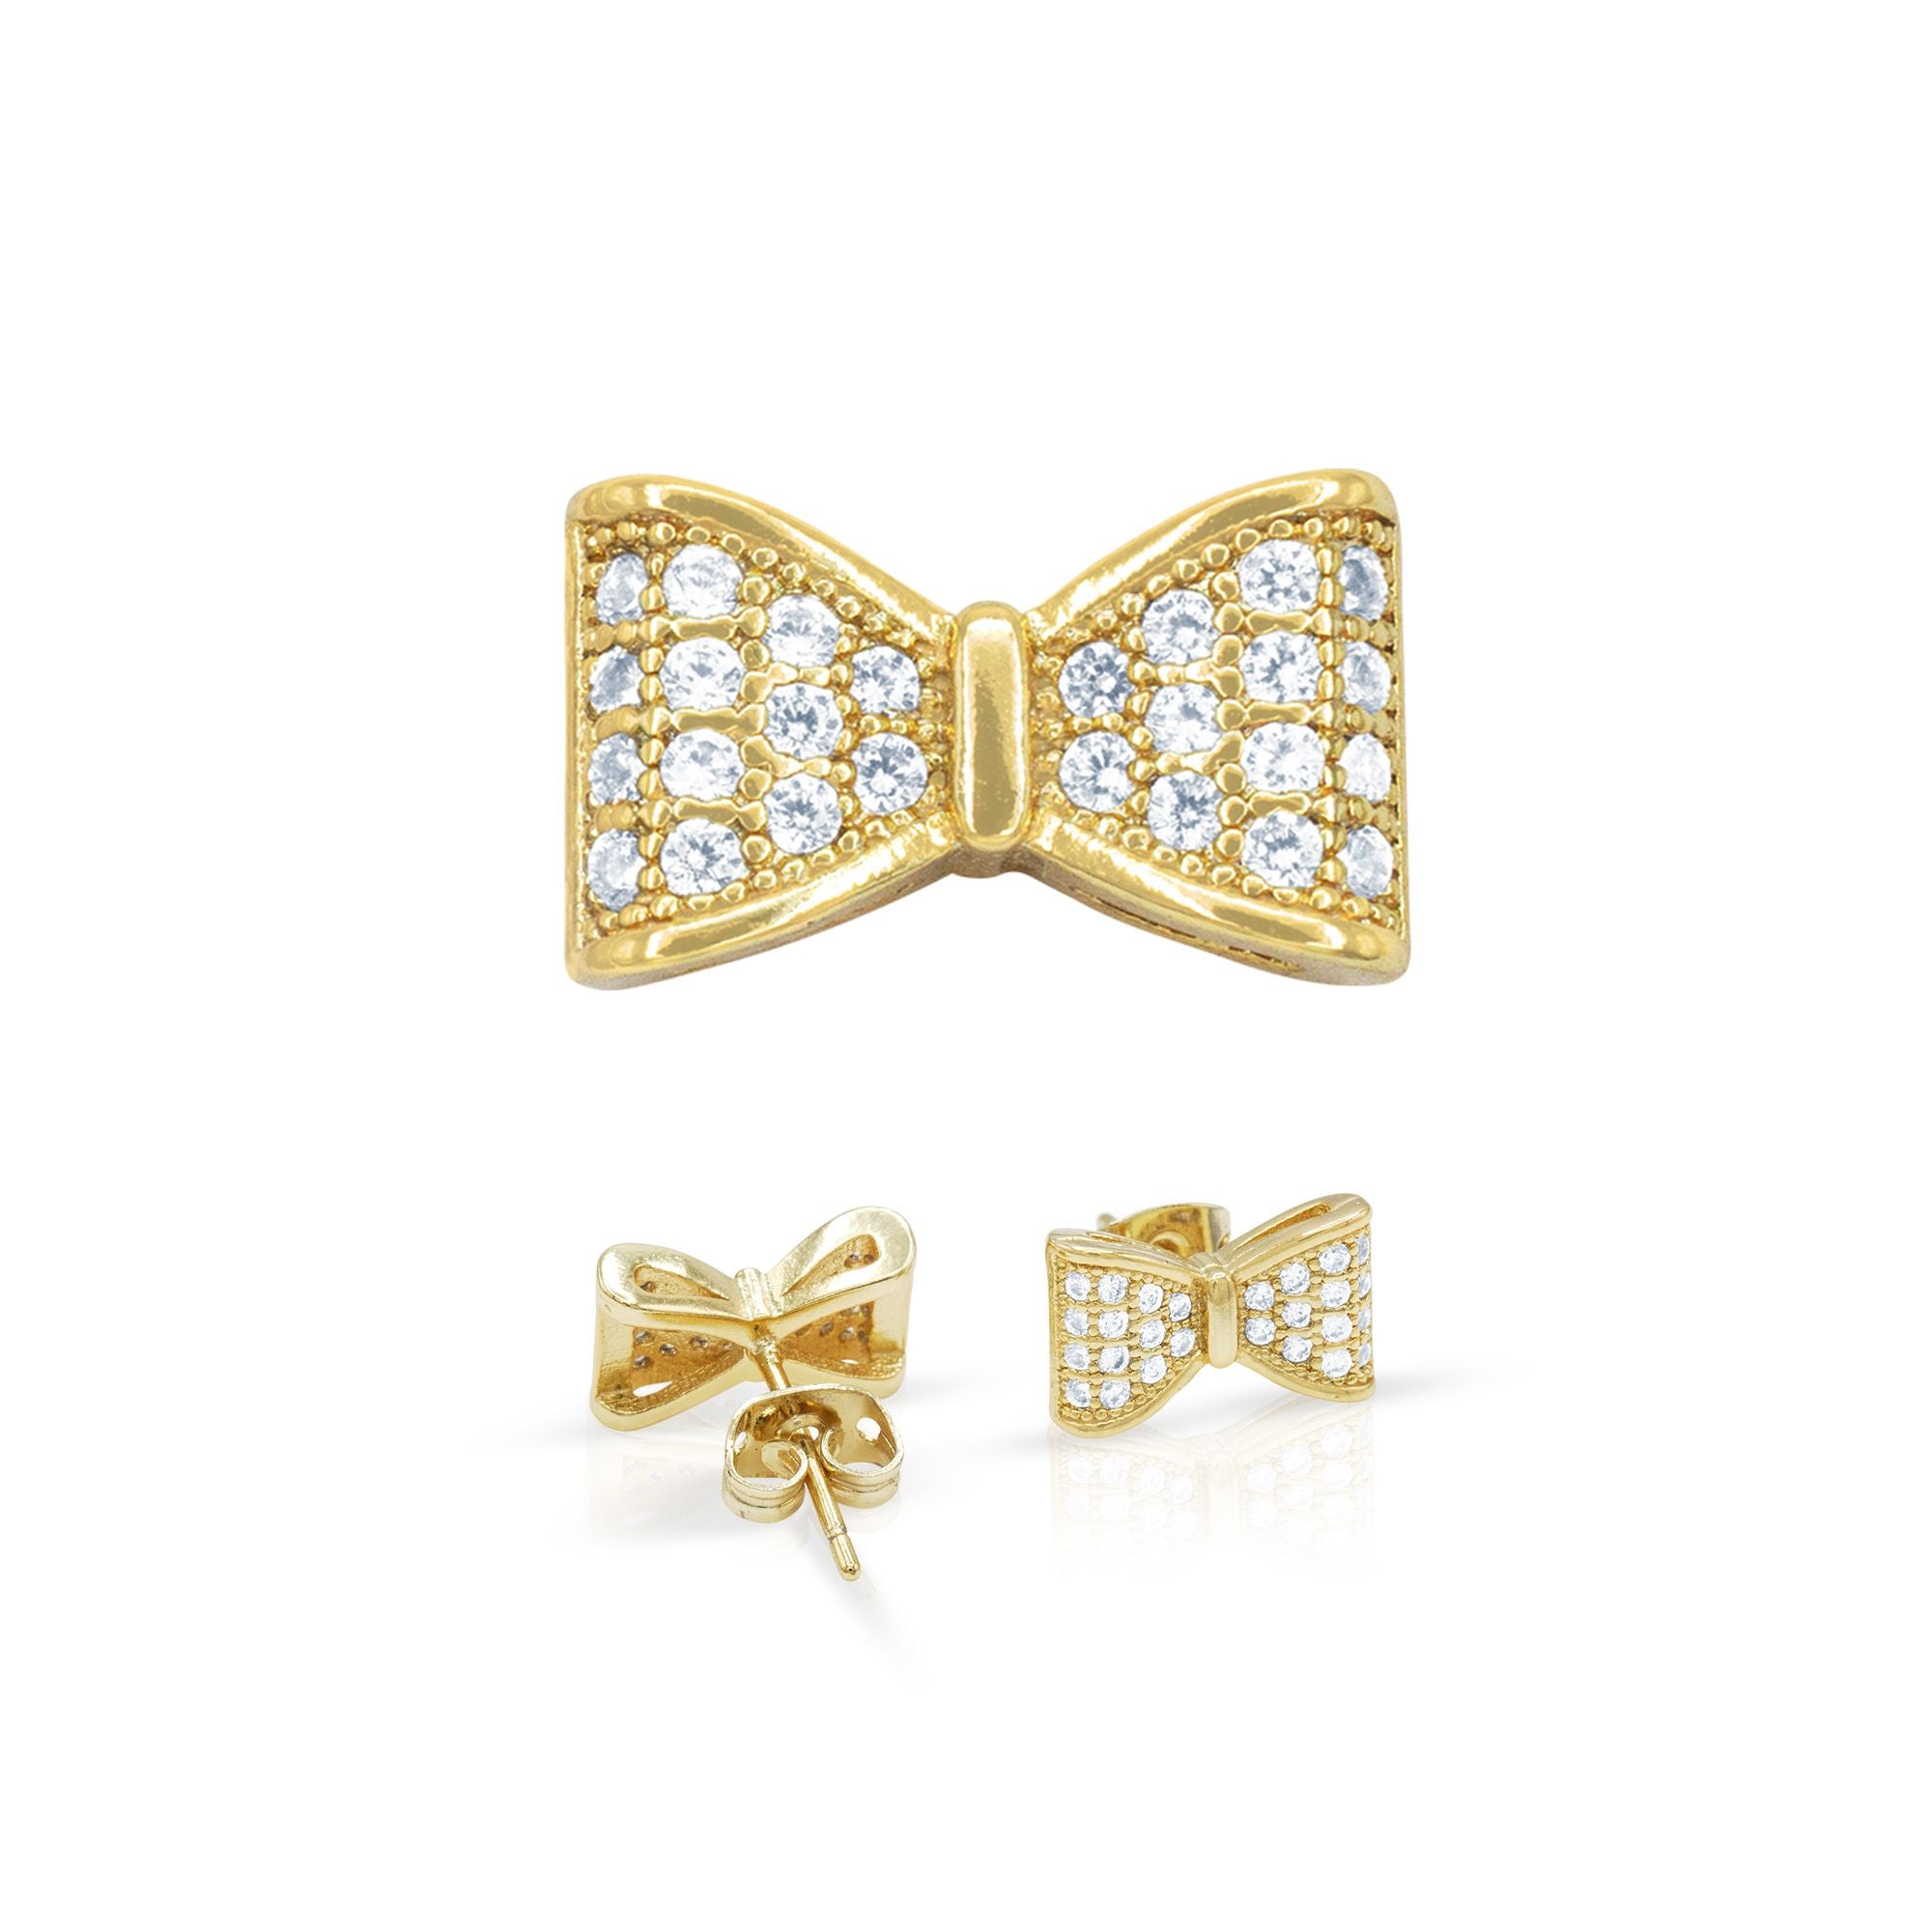 Bow Tie 14K Gold Filled Earrings Cubic Zirconia Hip Hop Studs Jewelry – JB  Jewelry BLVD